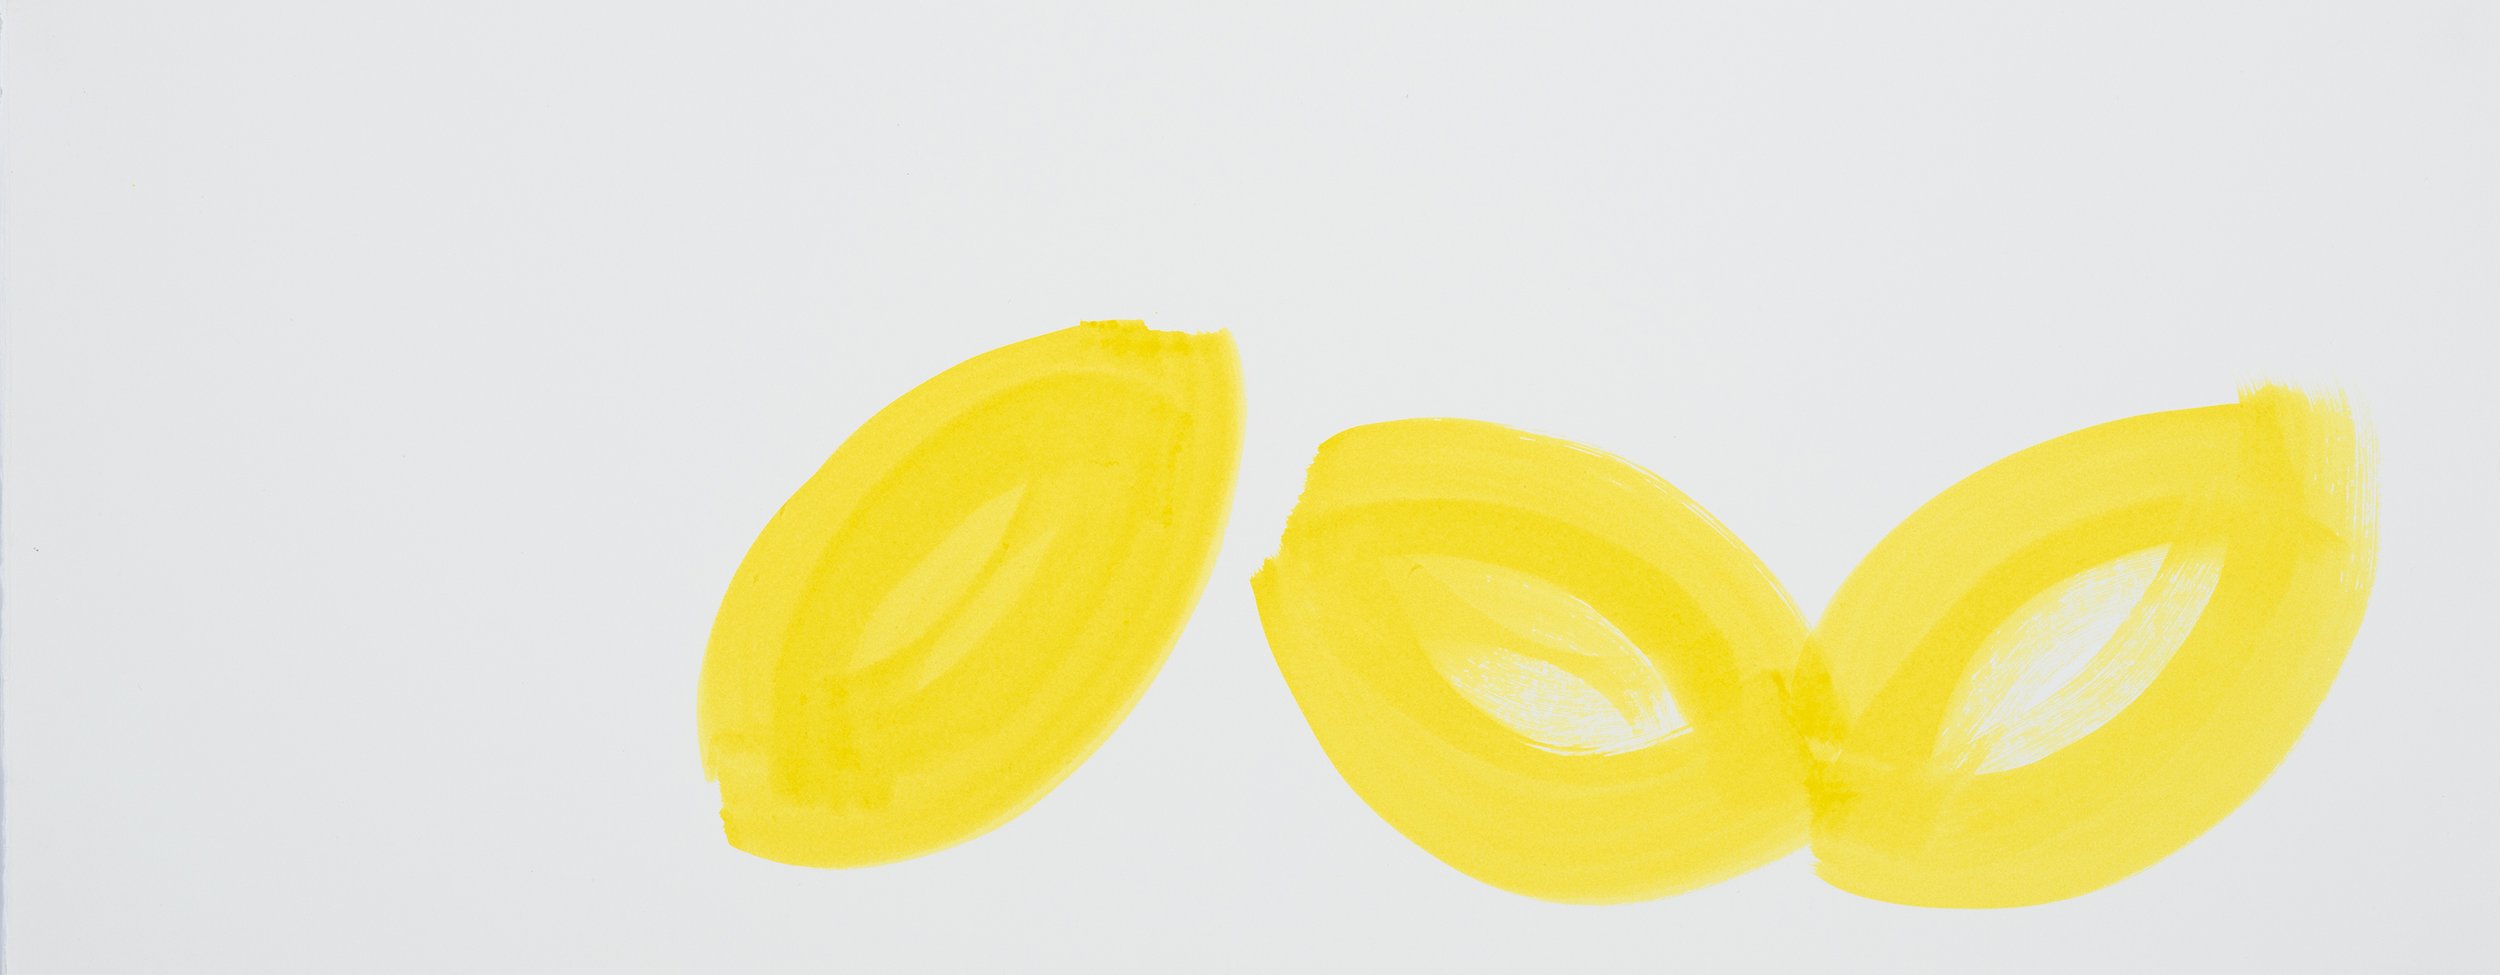 ensō | lemon (01), 2020 | ink on Fabriano paper | 11.75" x 29.5"